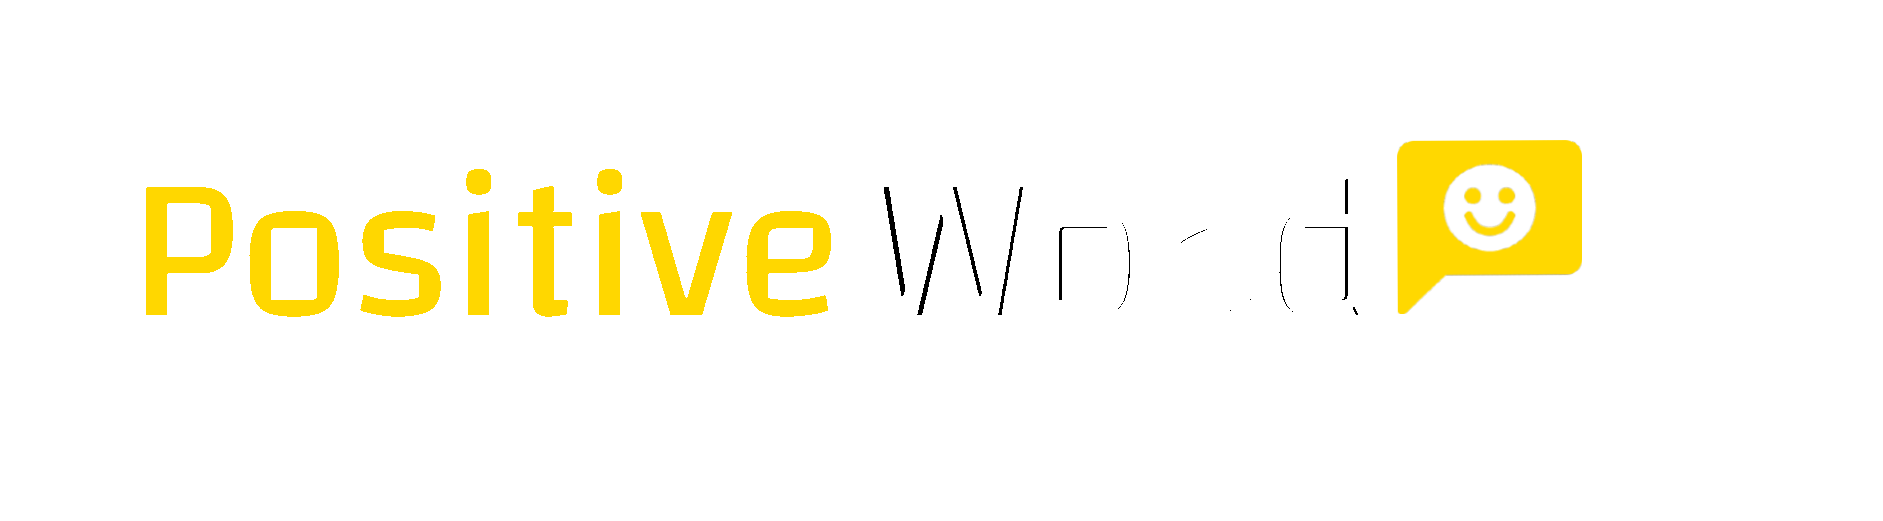 Positive World App logo